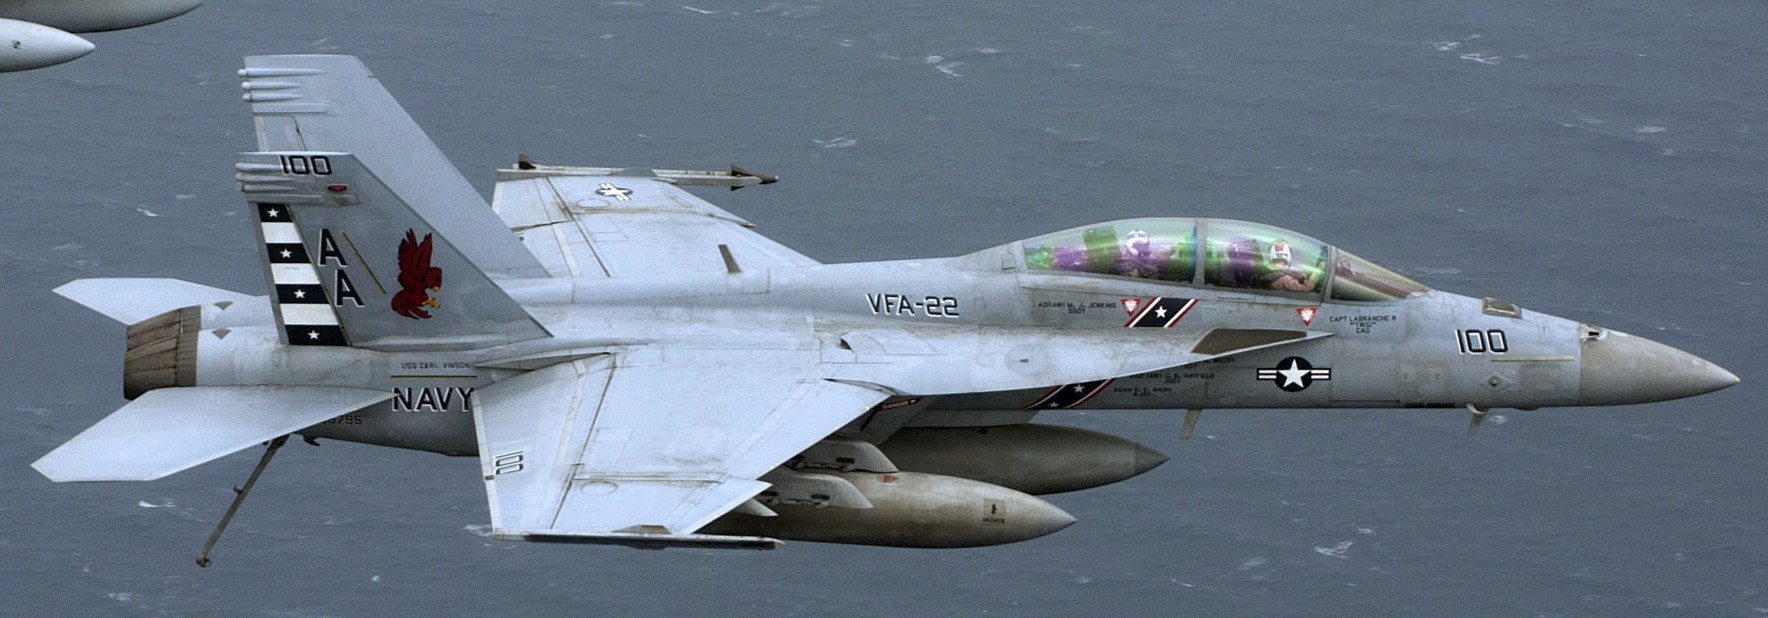 vfa-22 fighting redcocks strike fighter squadron f/a-18f super hornet cvn-70 uss carl vinson cvw-17 us navy 32